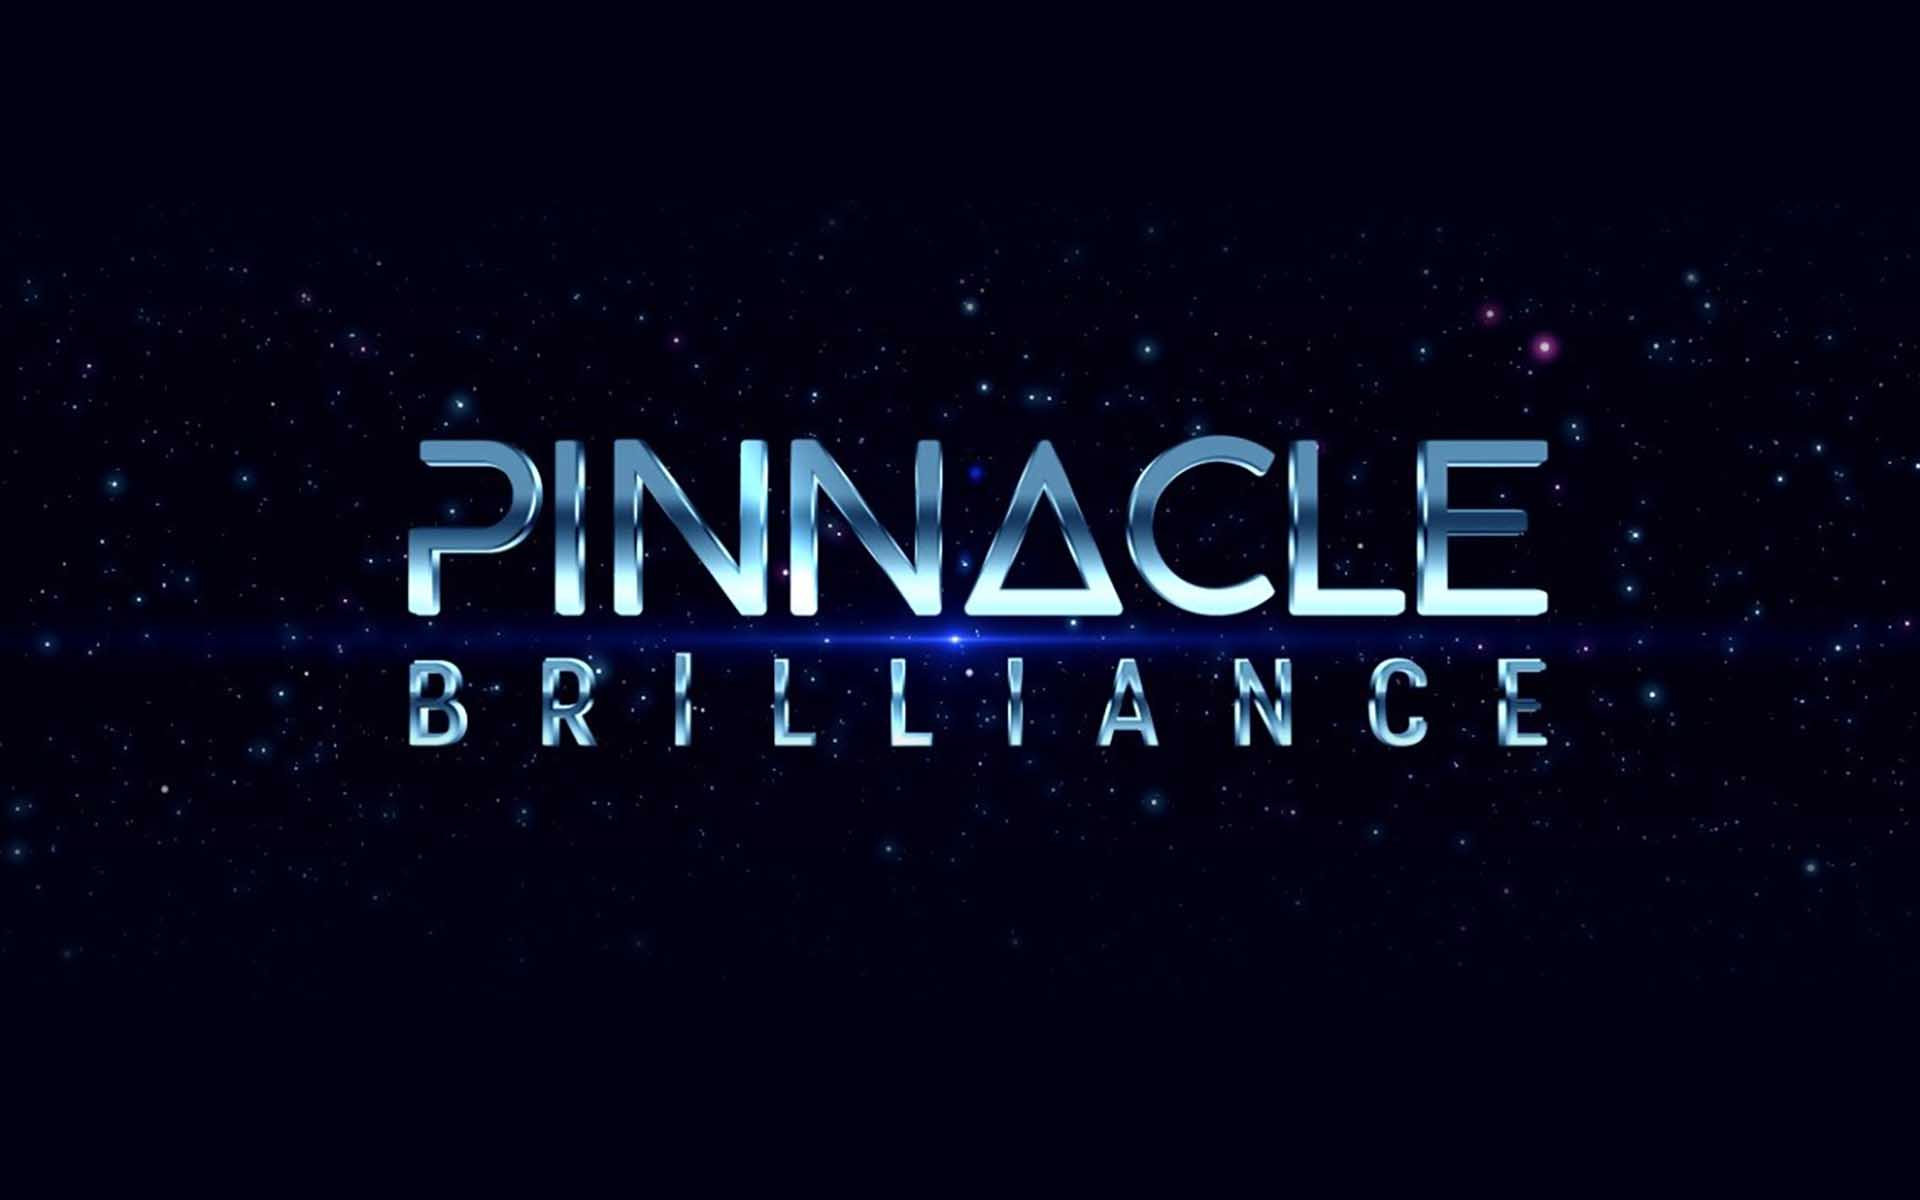 David Drake joins the advisory board of Pinnacle Brilliance Systems